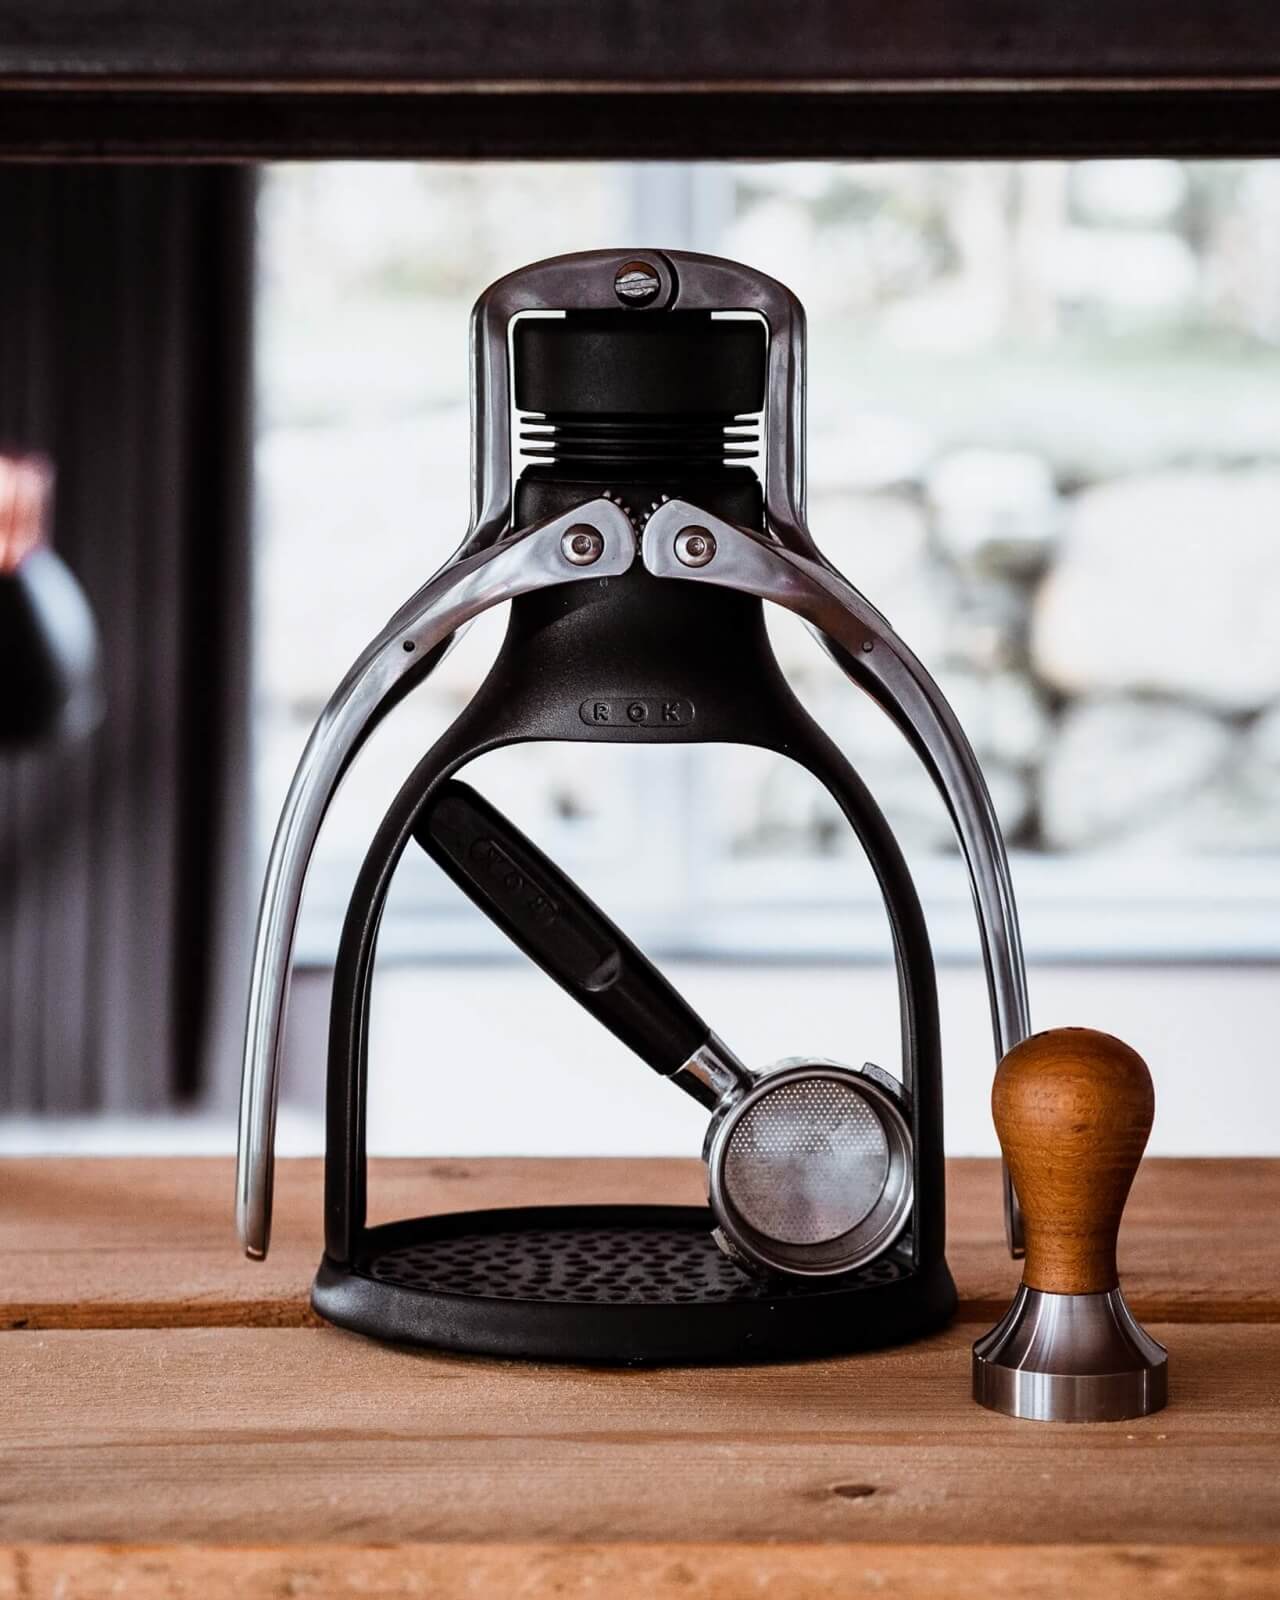 ROK Presso Manual Espresso Maker